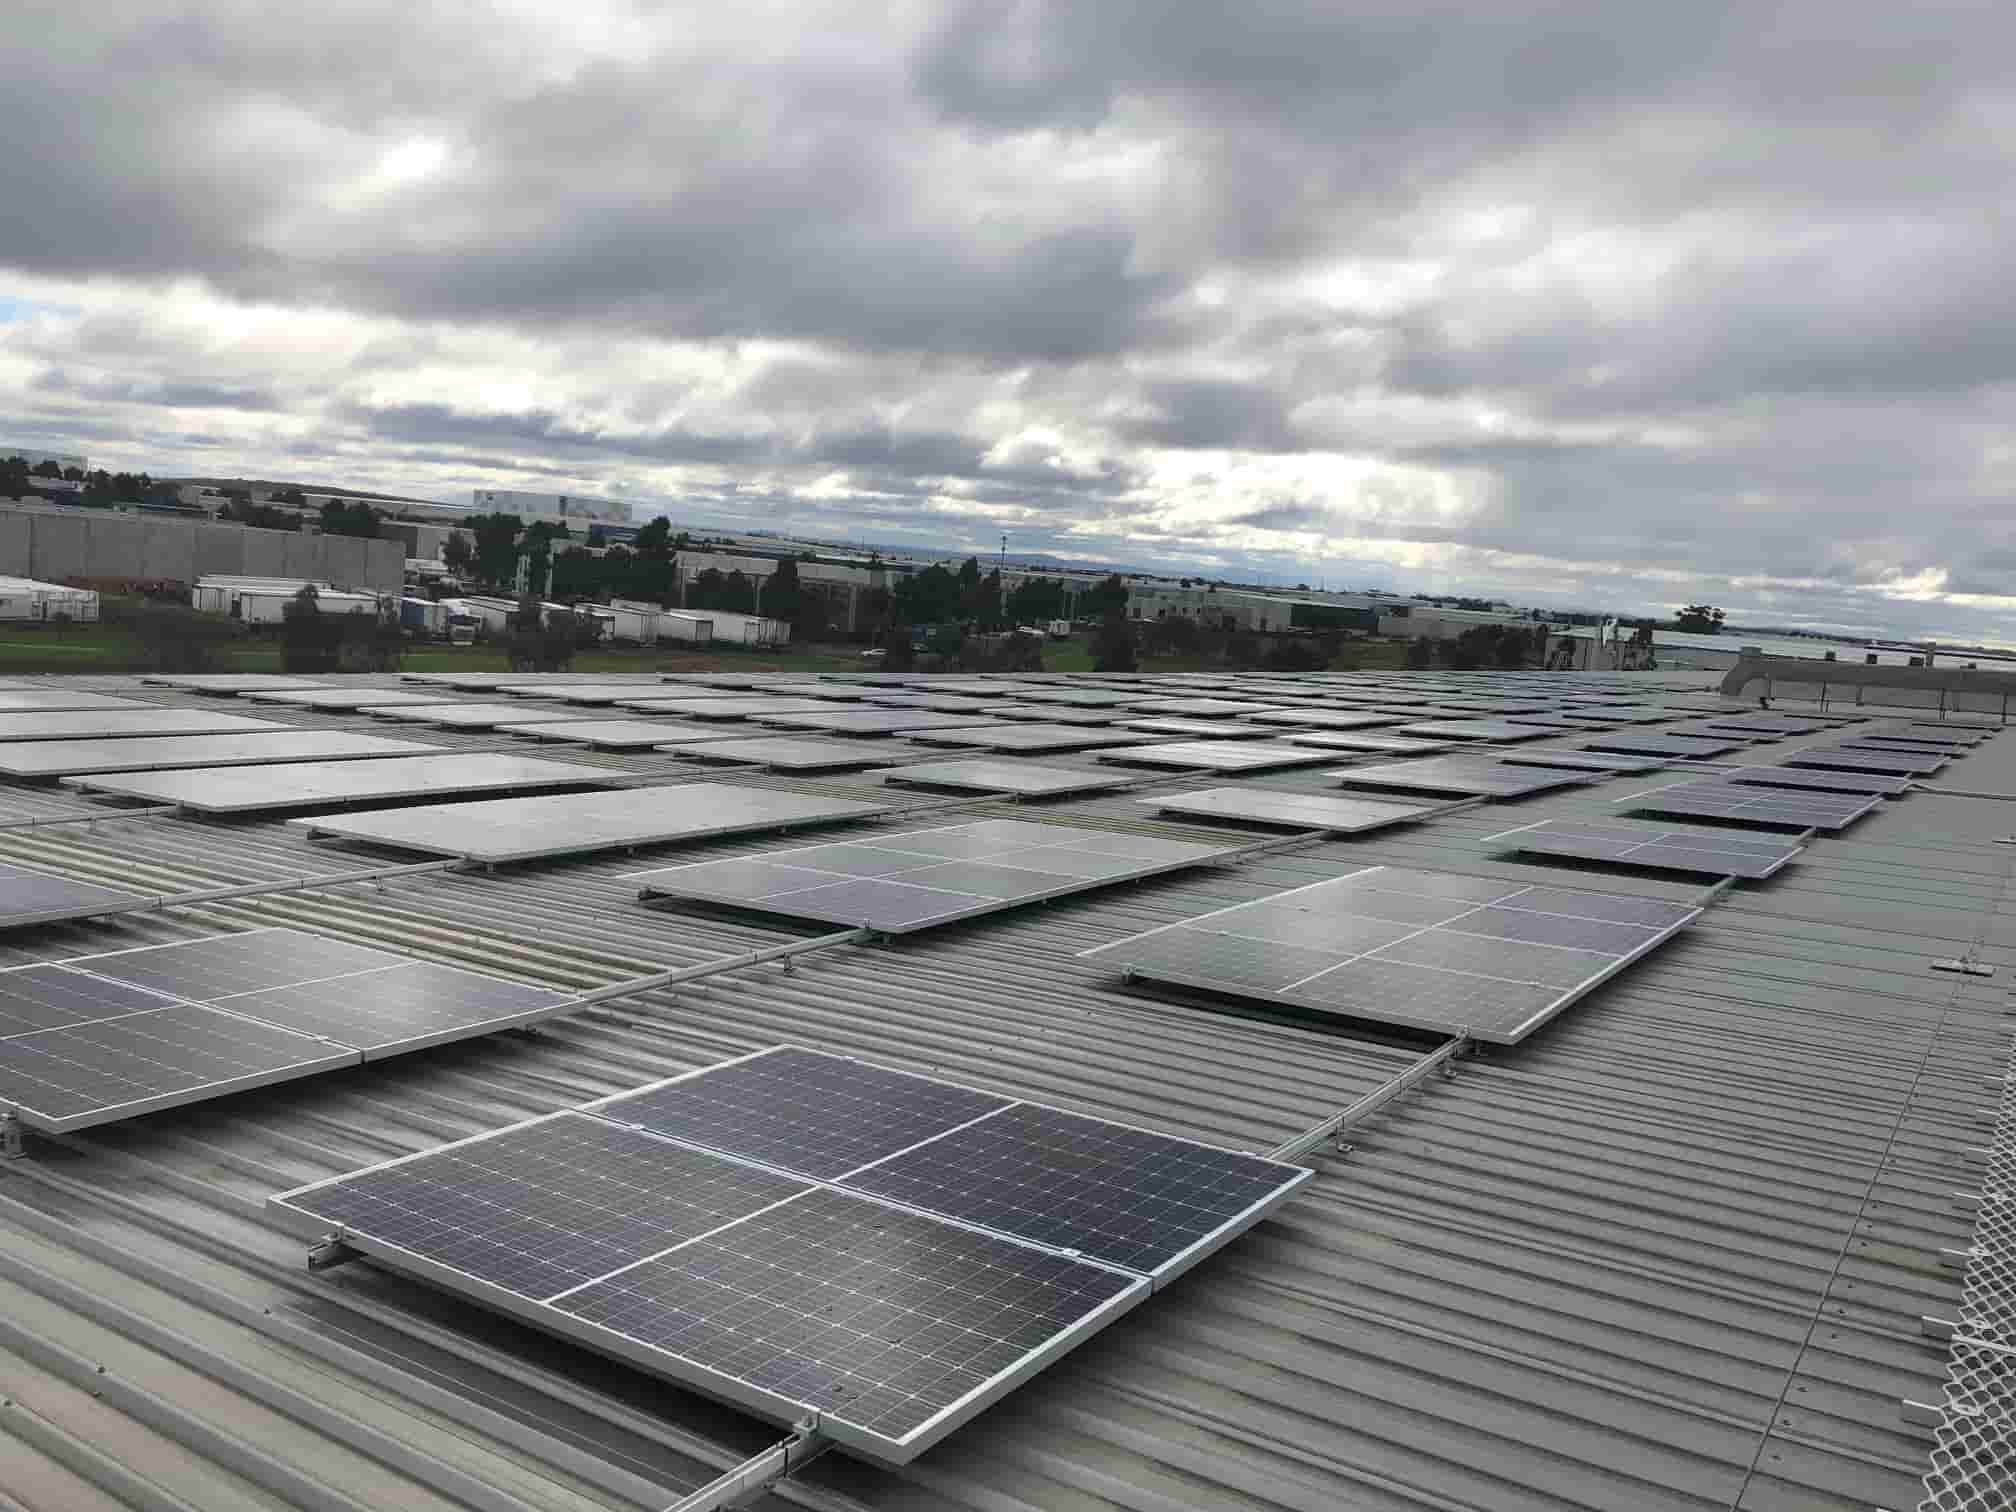 A view of CHEP Australia's solar energy panels